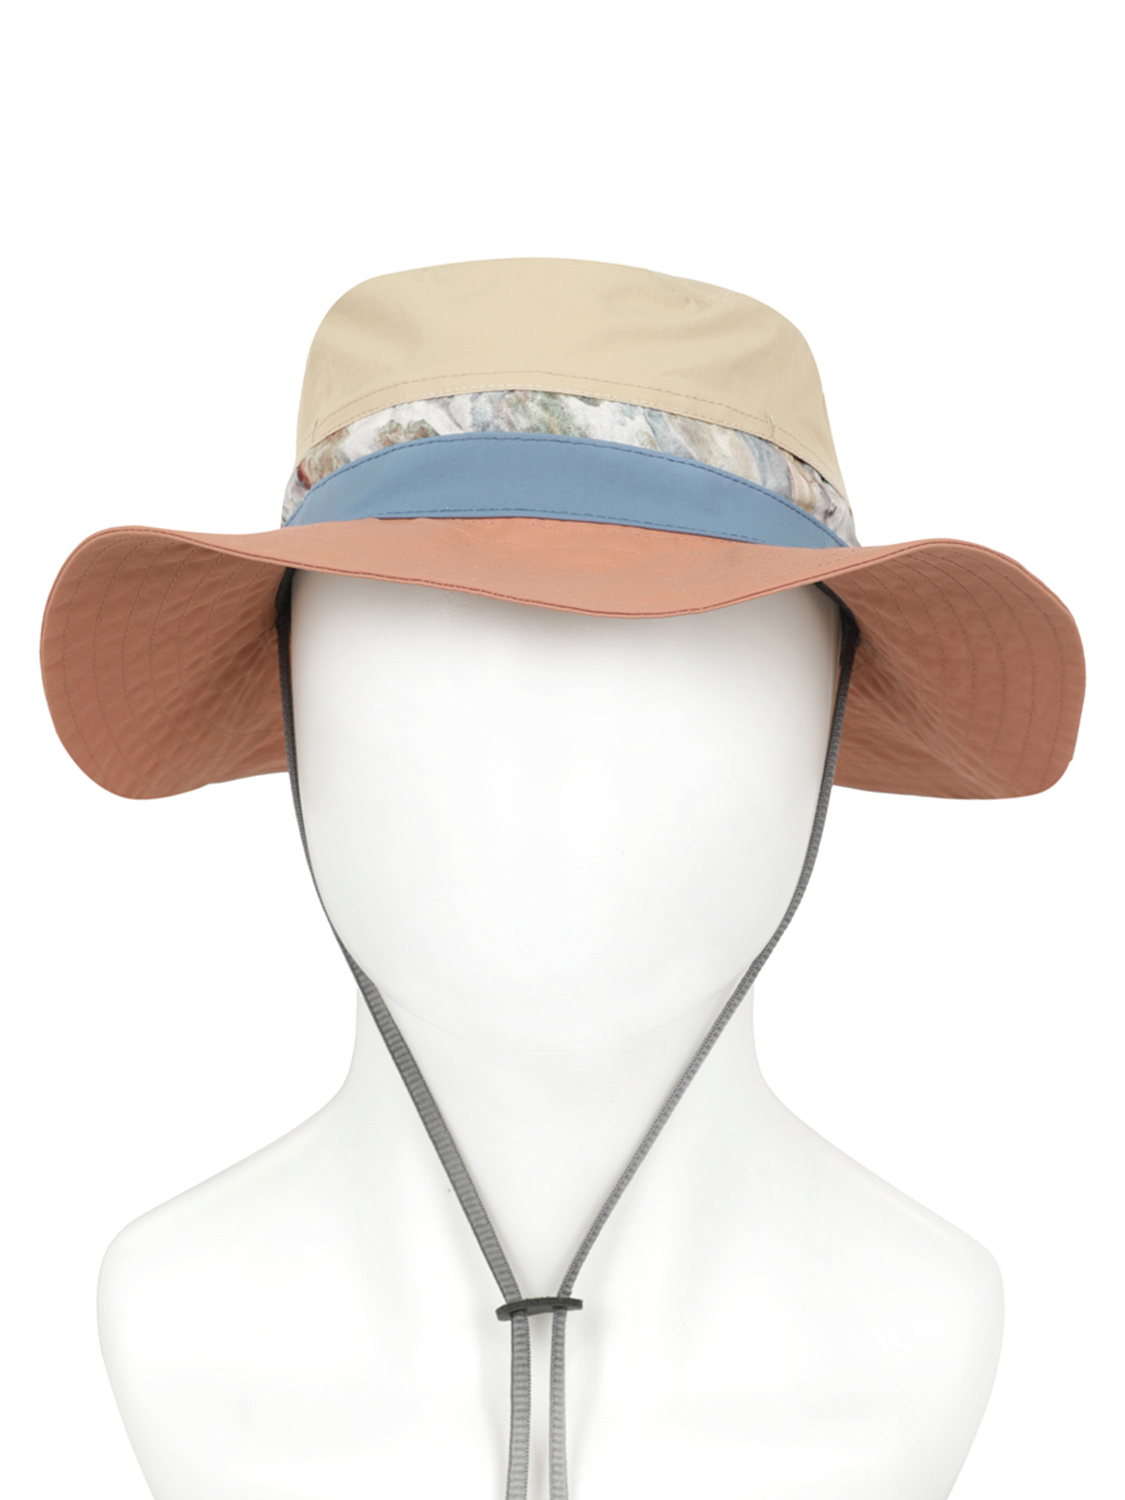 Панама Buff Explore Booney Hat Kivu Sand – купить по цене 5290 руб, магазин  «Кант»